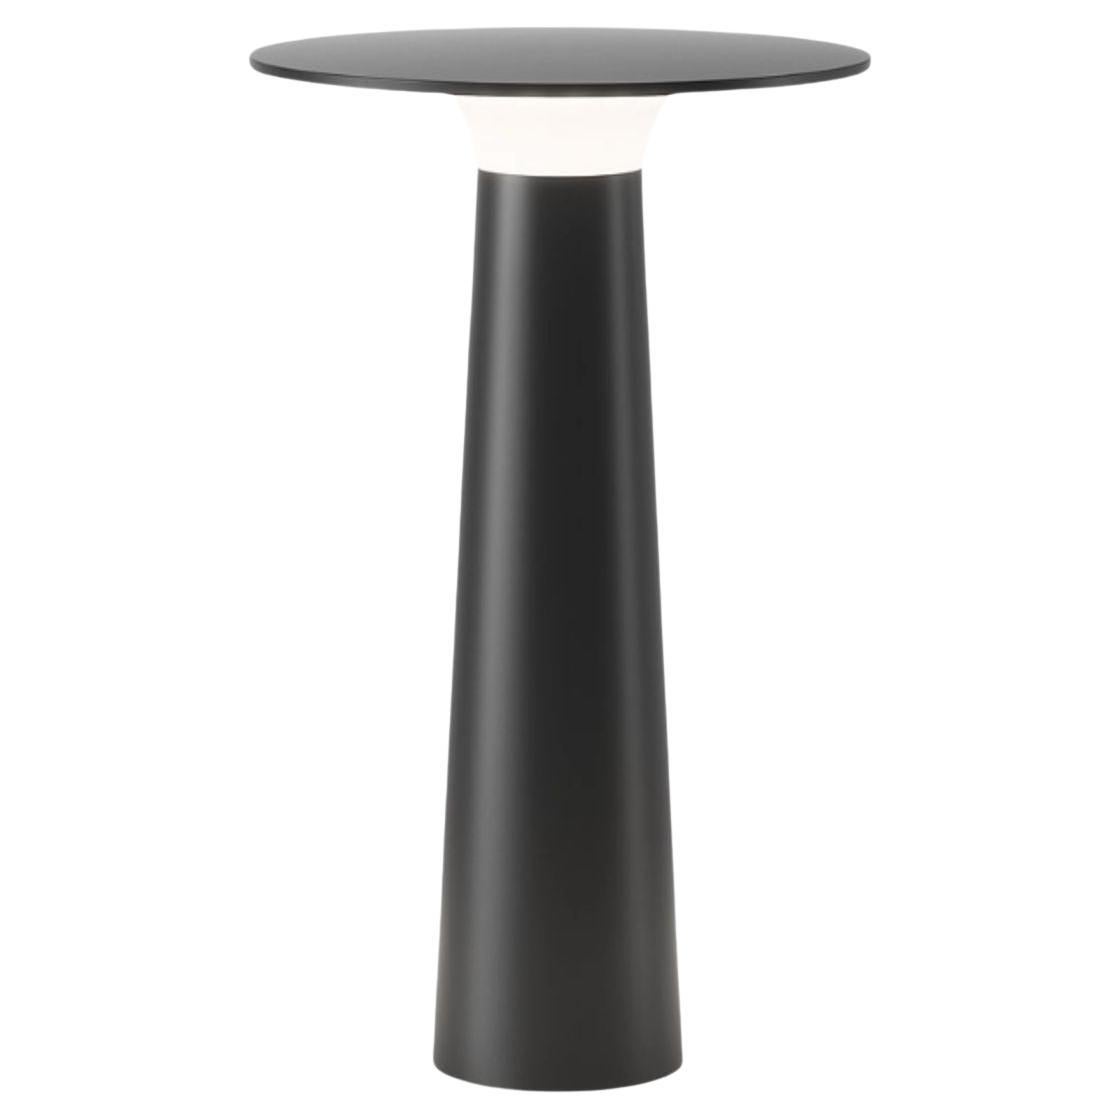 Klaus Nolting 'Lix' Portable Outdoor Aluminum Table Lamp in Black for Ip44de